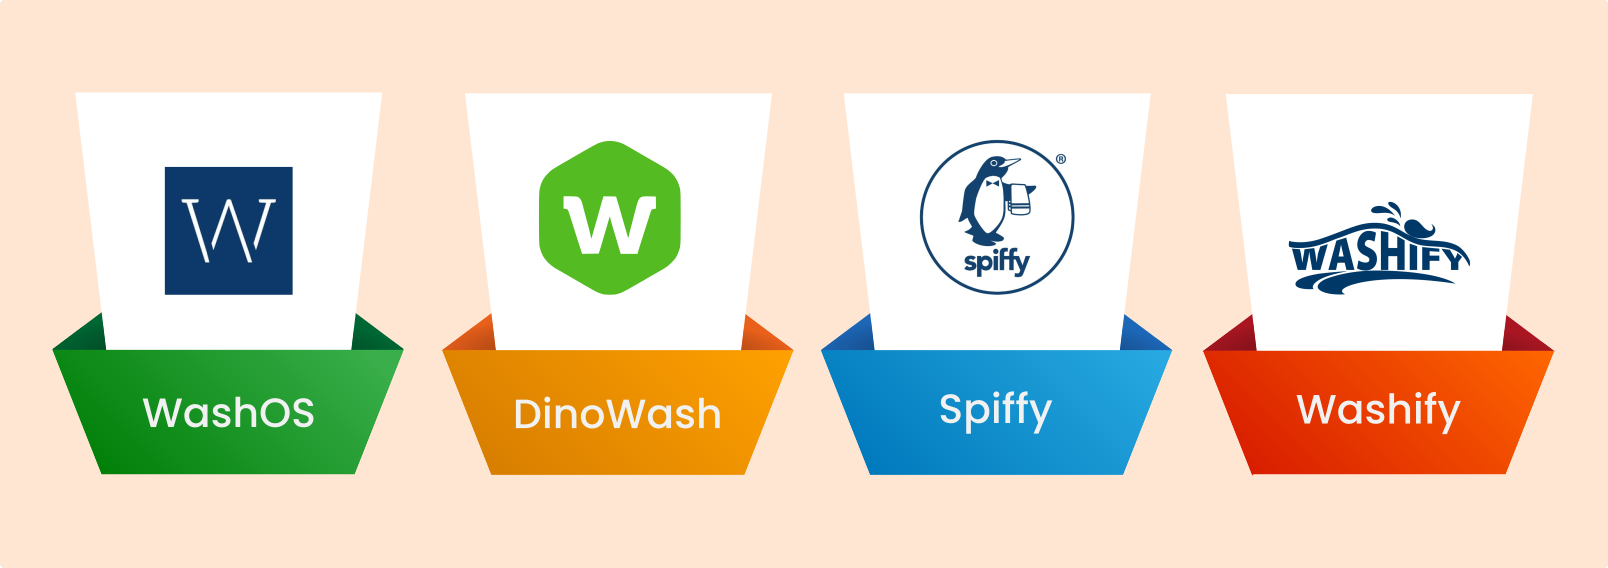 car-wash-app-marketplace